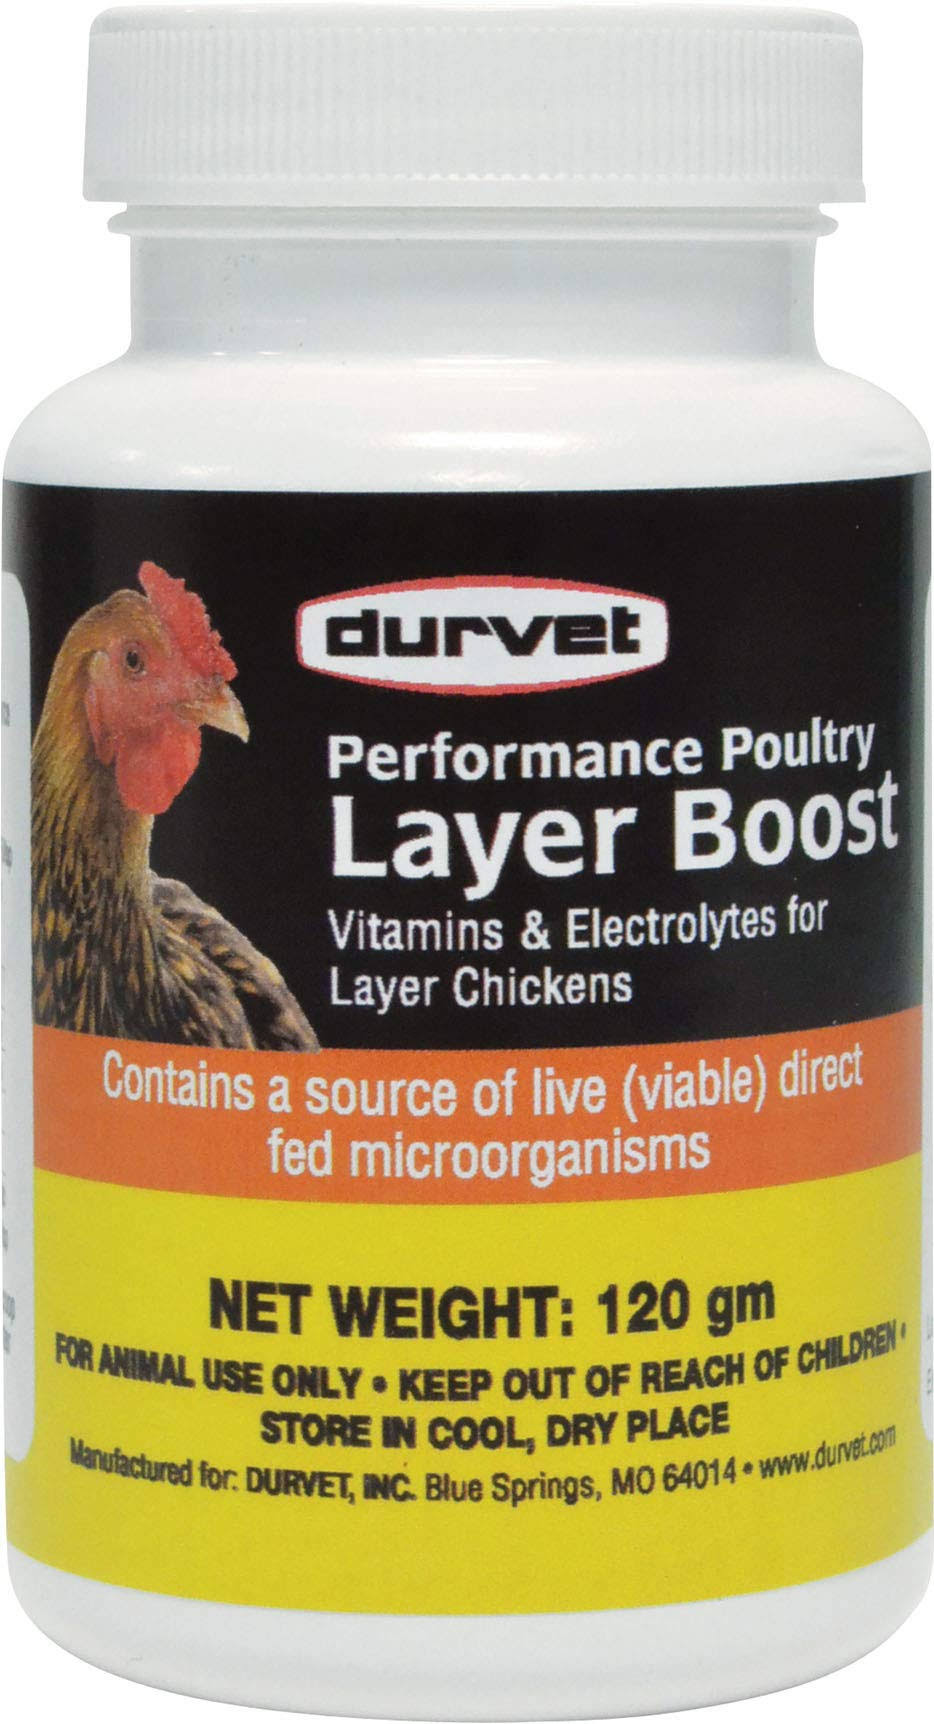 Durvet Layer Boost Vitamins & Electrolytes - 120g